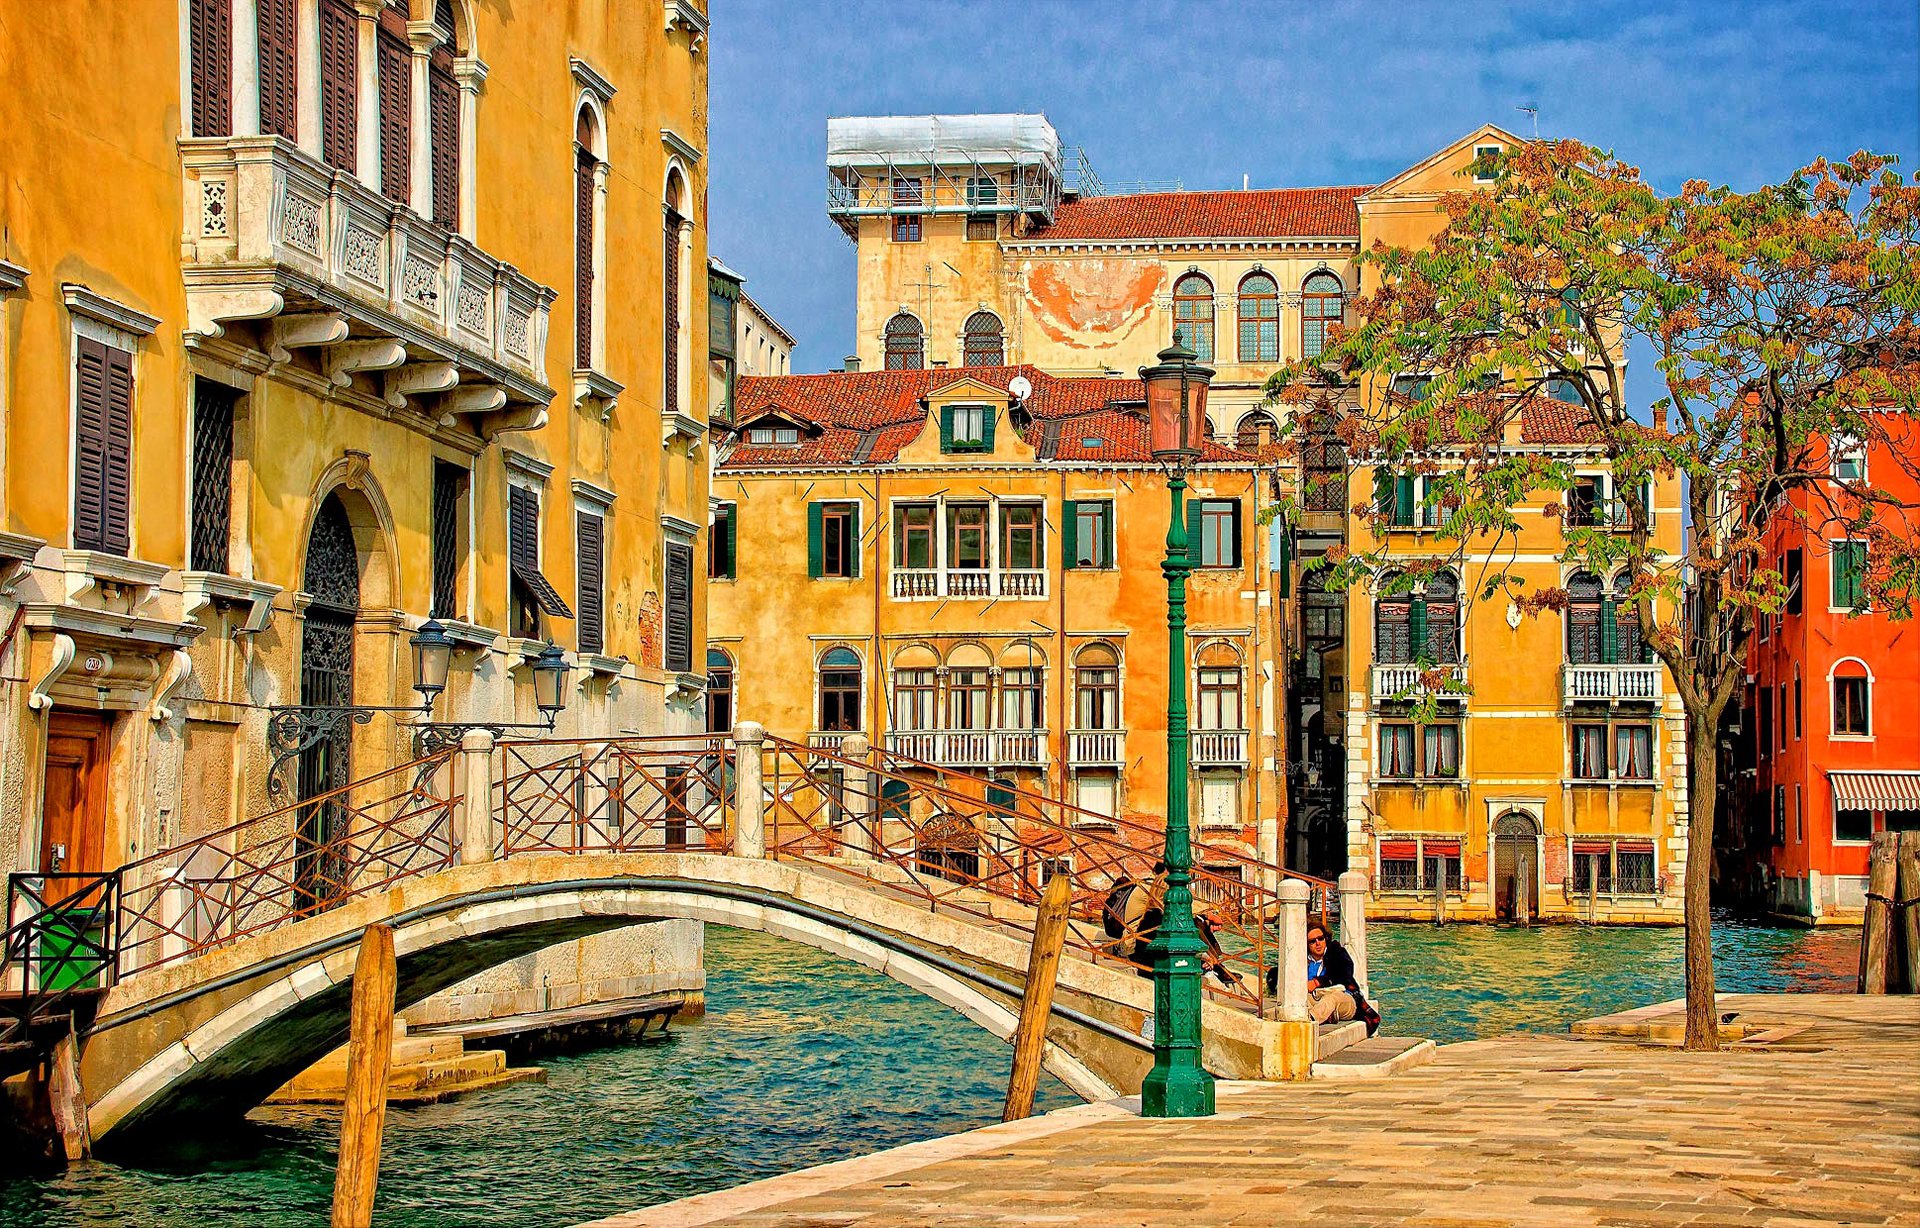 Bridges Houses Italy Street Canal Venice Cities wallpaper